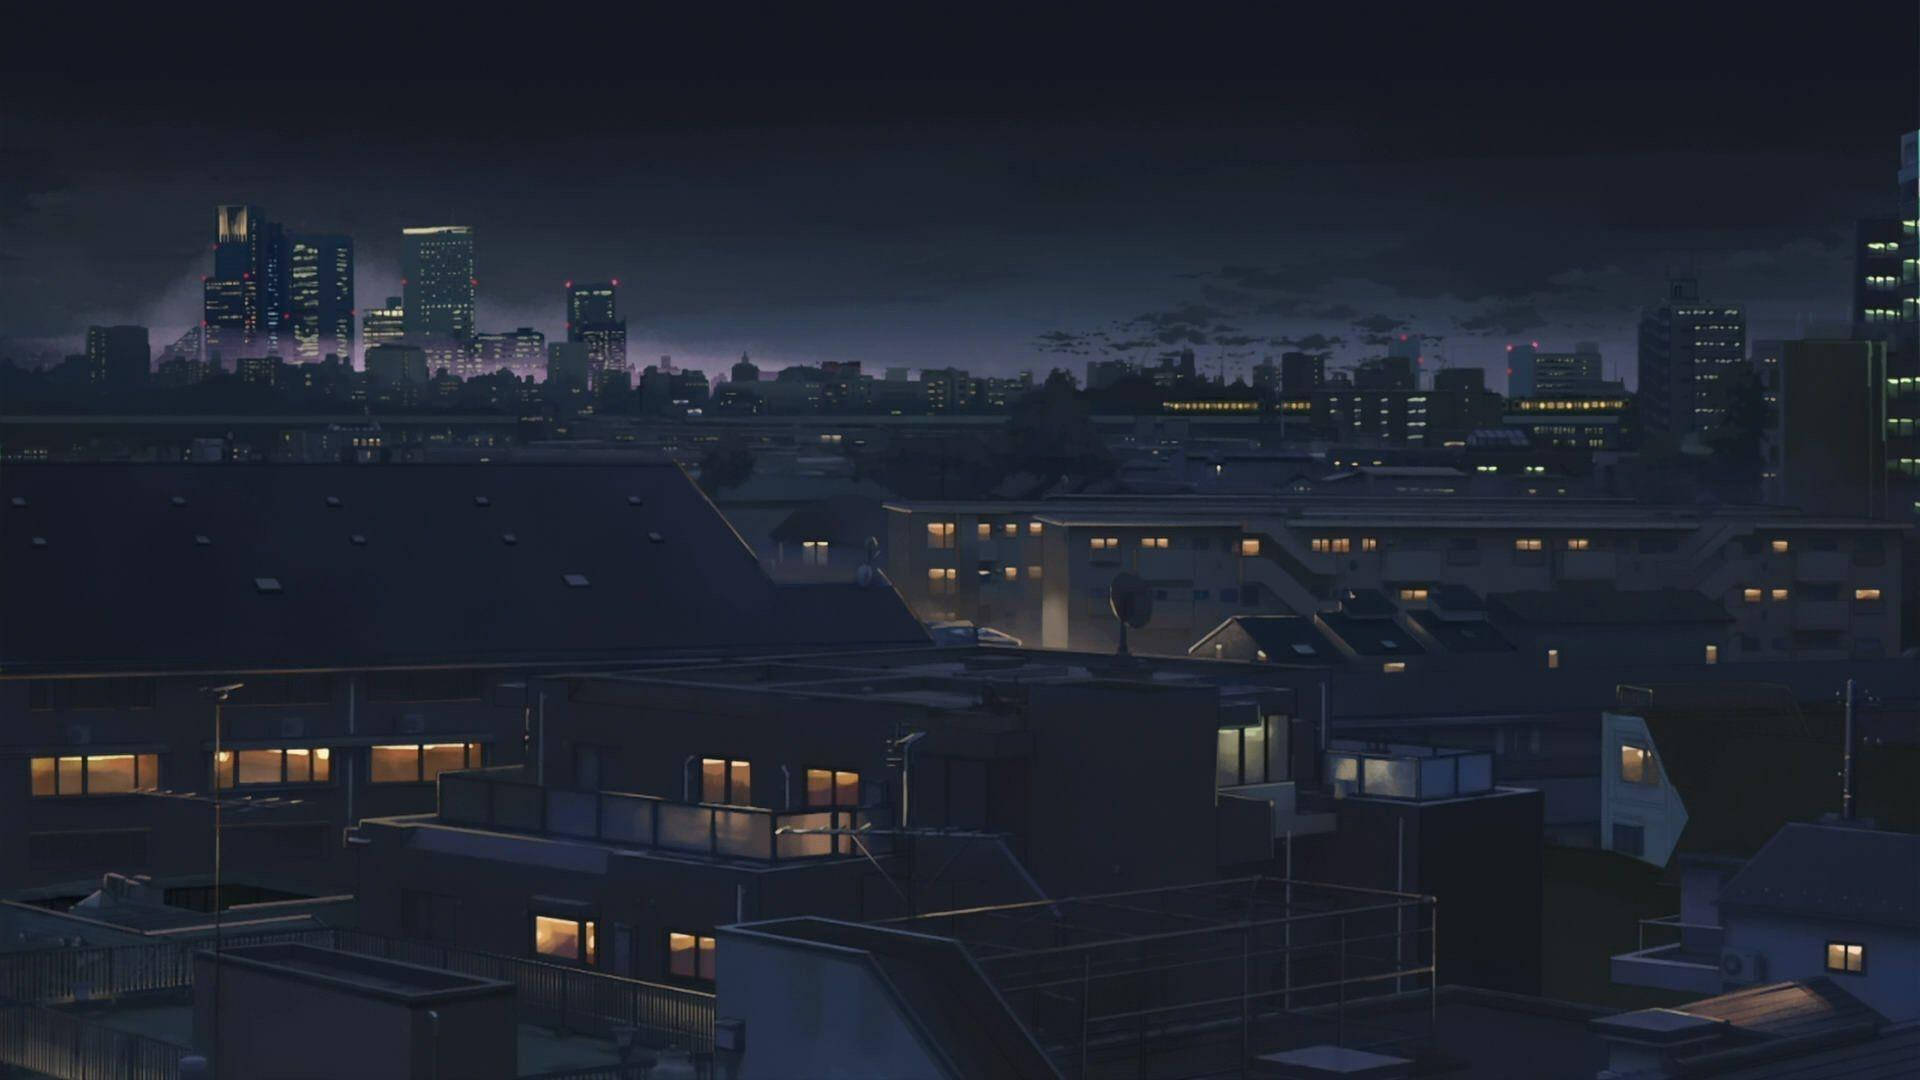 Download Aesthetic Anime Desktop Residential At Night Wallpaper | Wallpapers .com